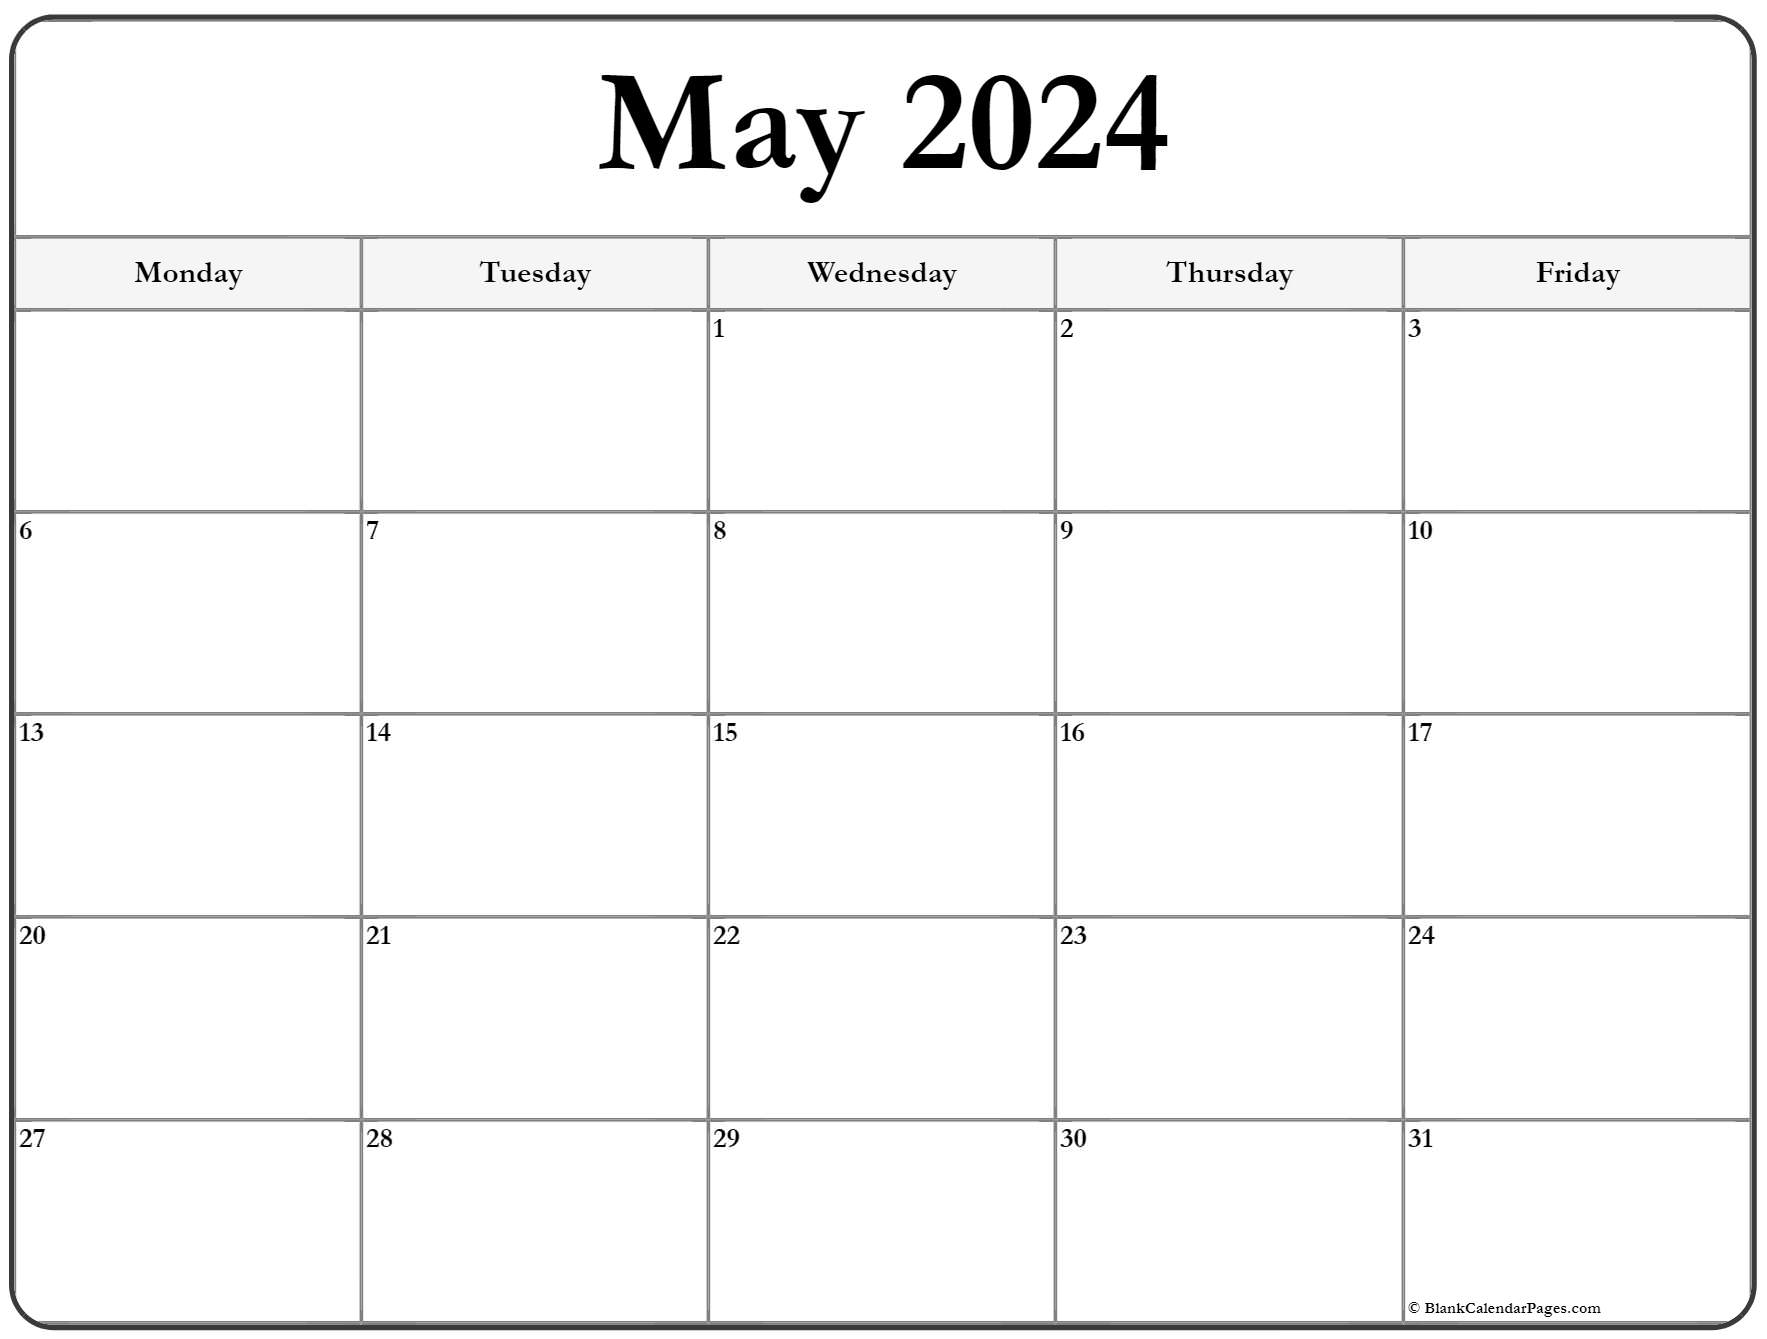 May 2020 Monday Calendar | Monday to Sunday